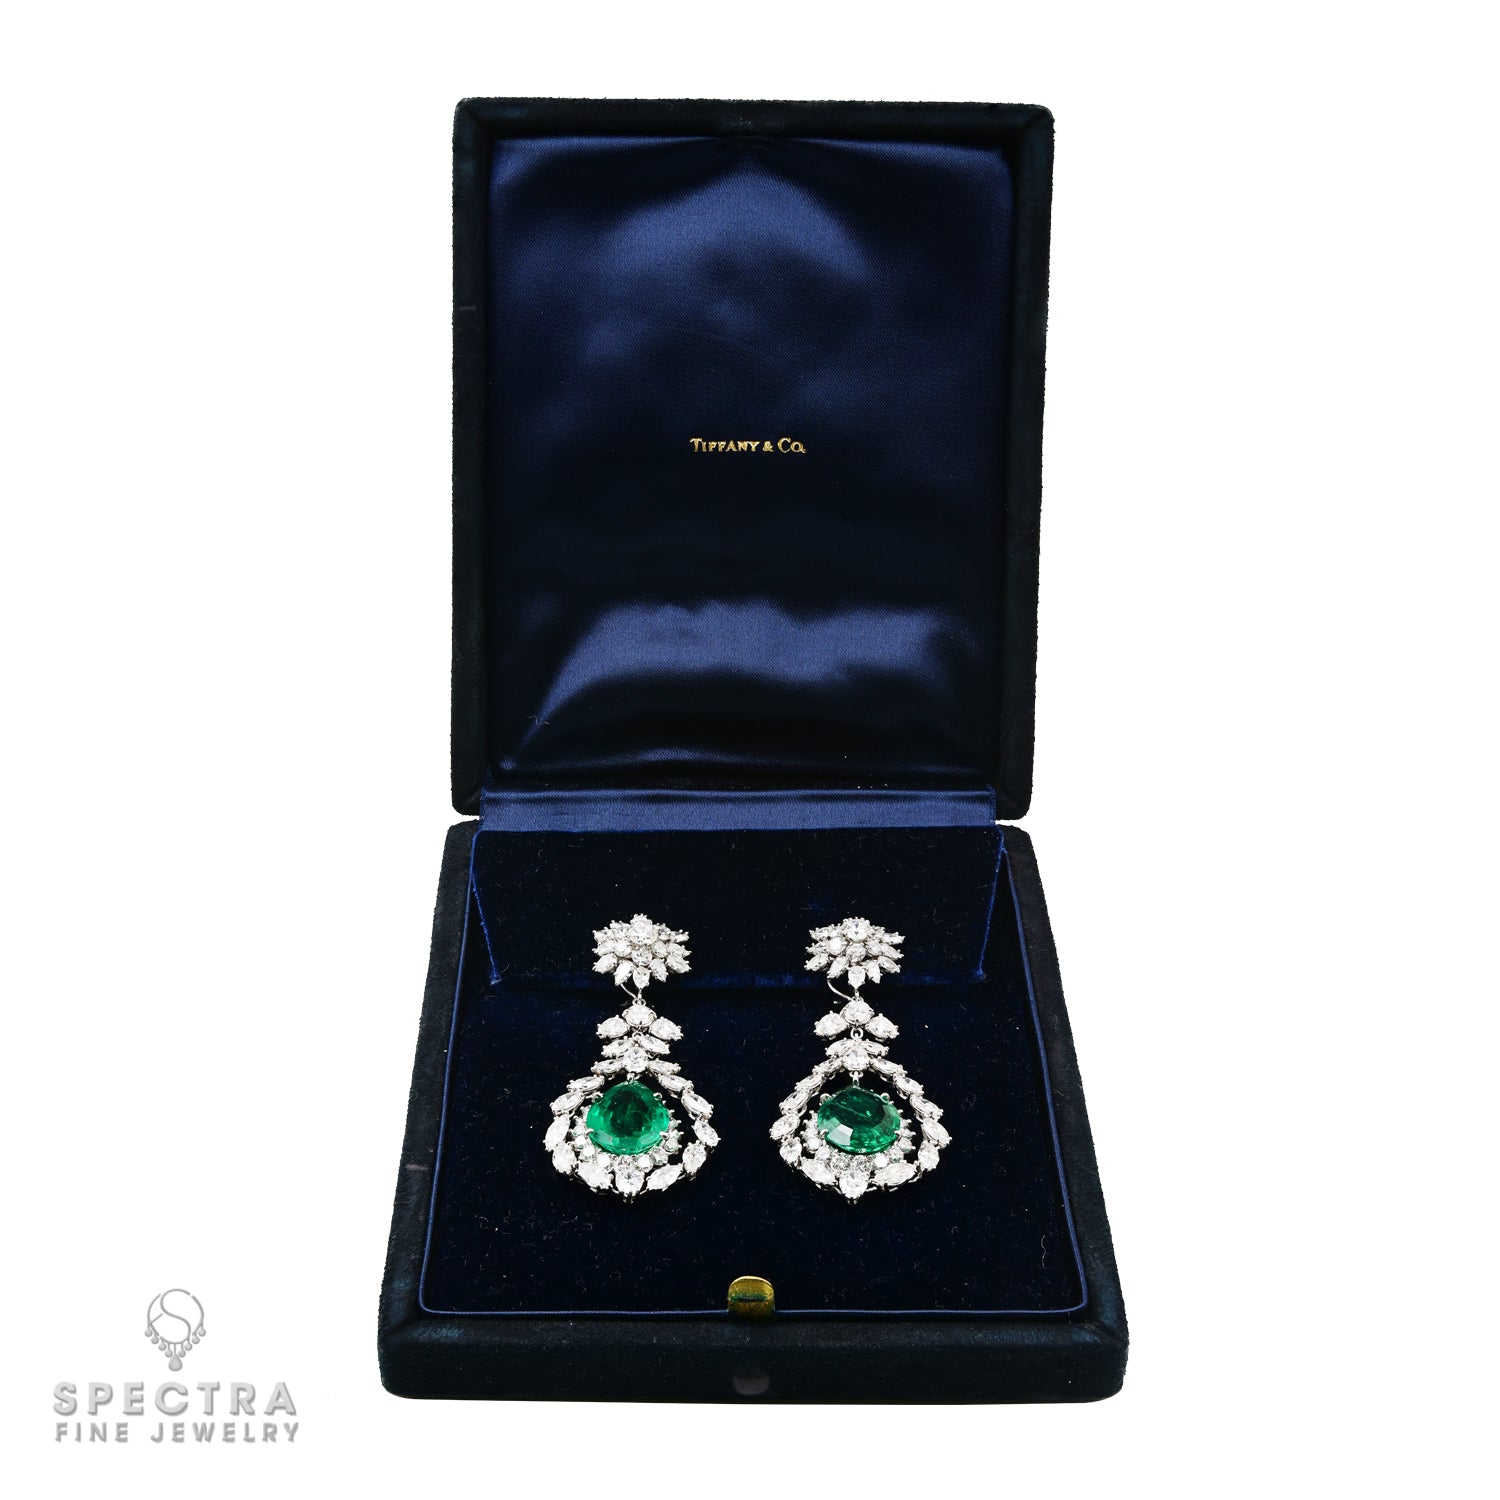 Tiffany & Co. Colombian Emerald and Diamond Drop Earrings